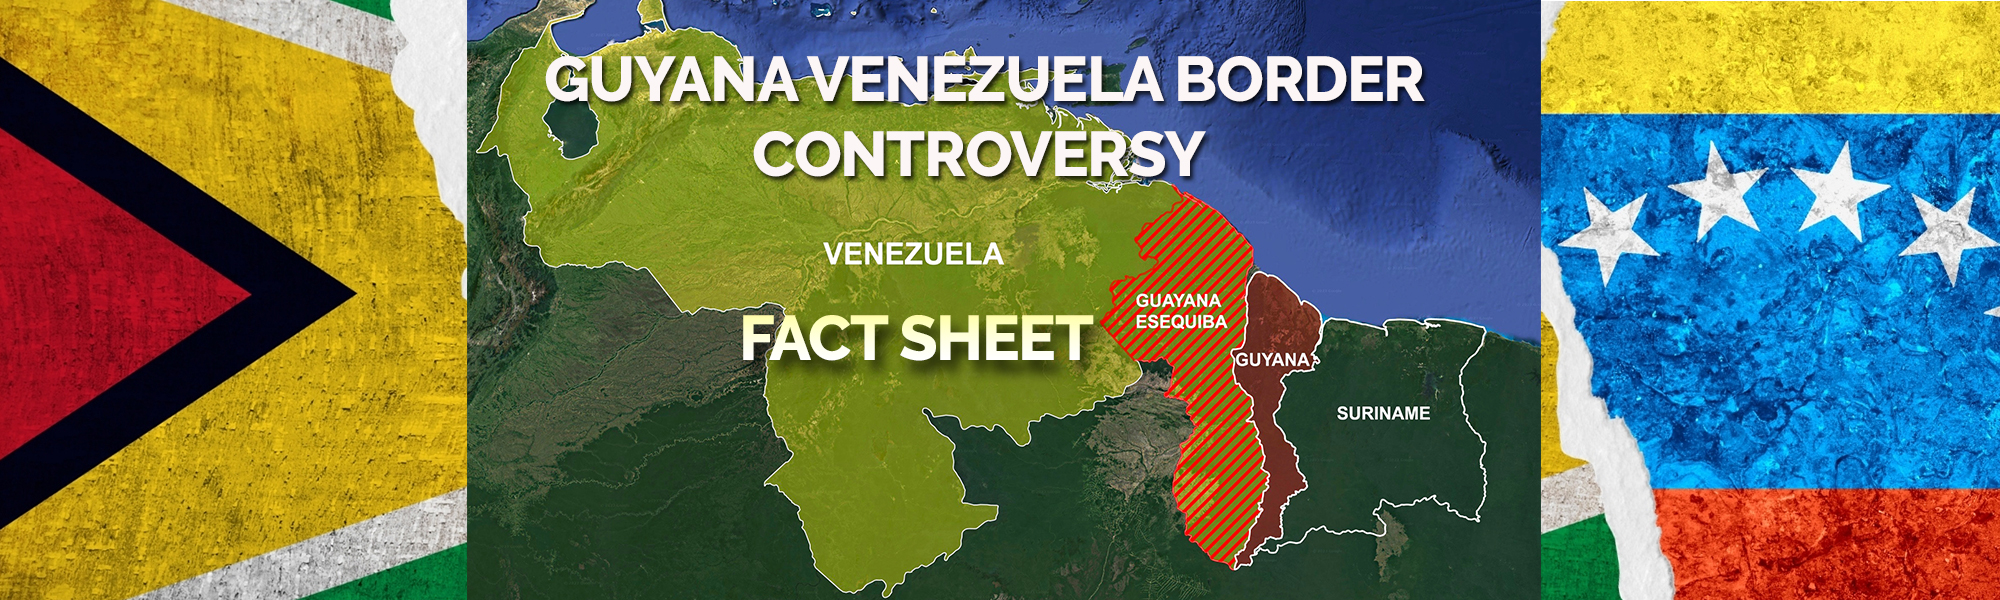 Guyana-Venezuela Border Controversy Fact Sheet